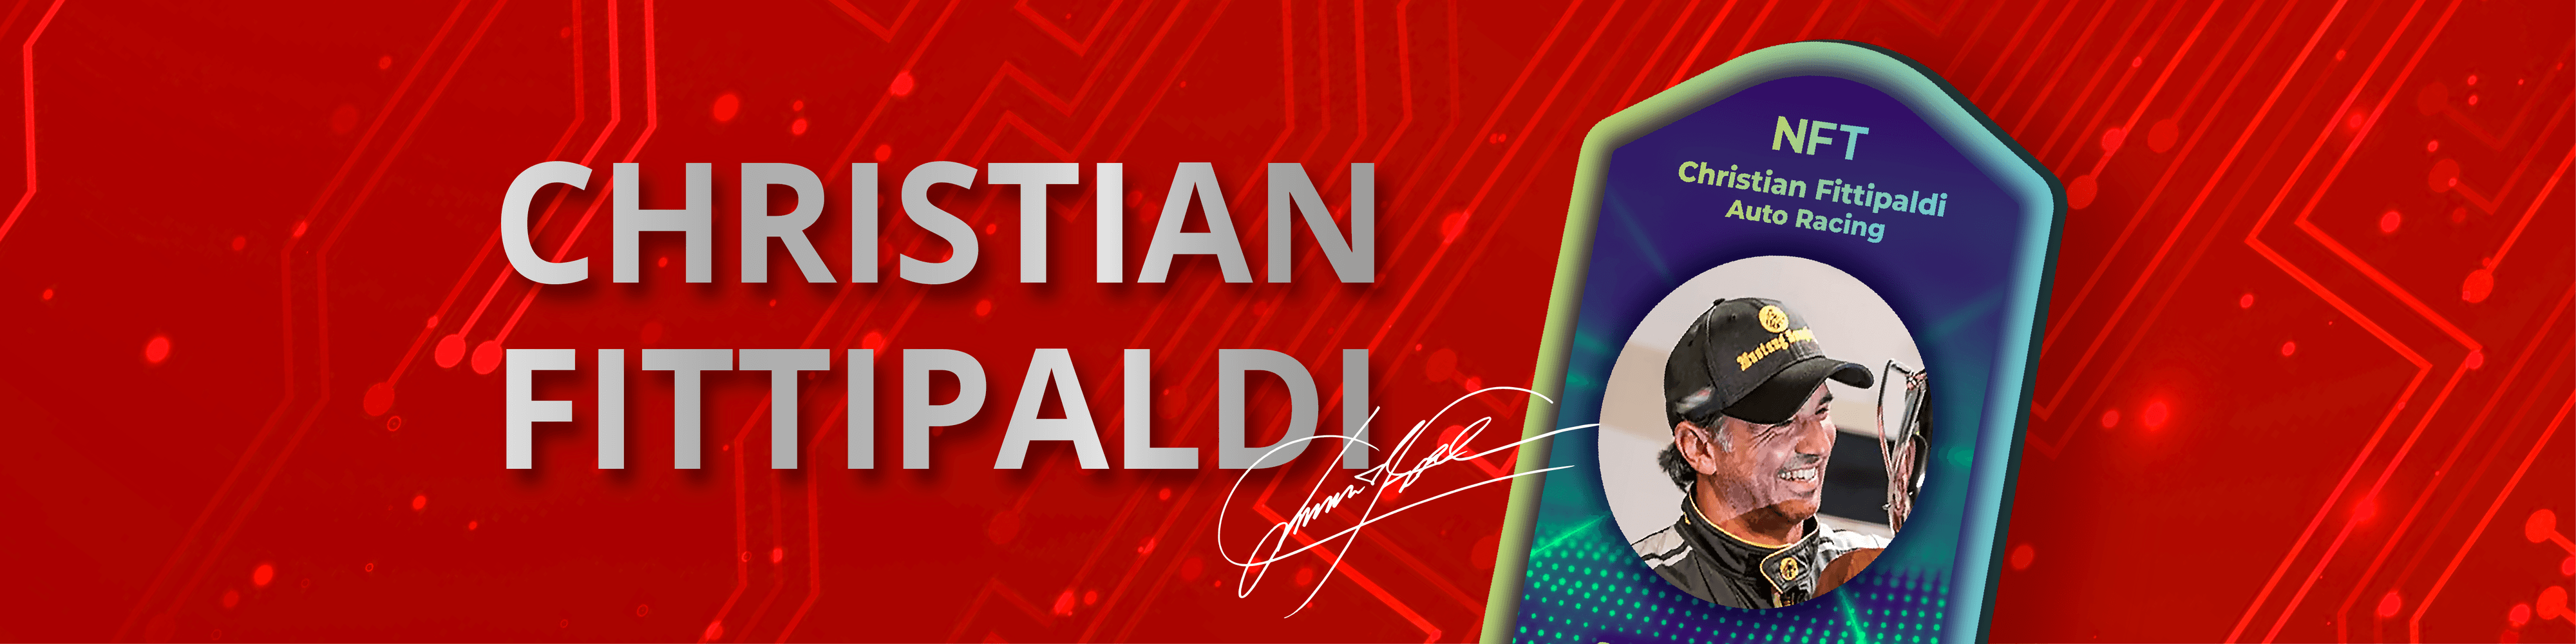 Christian Fittipaldi - IDG